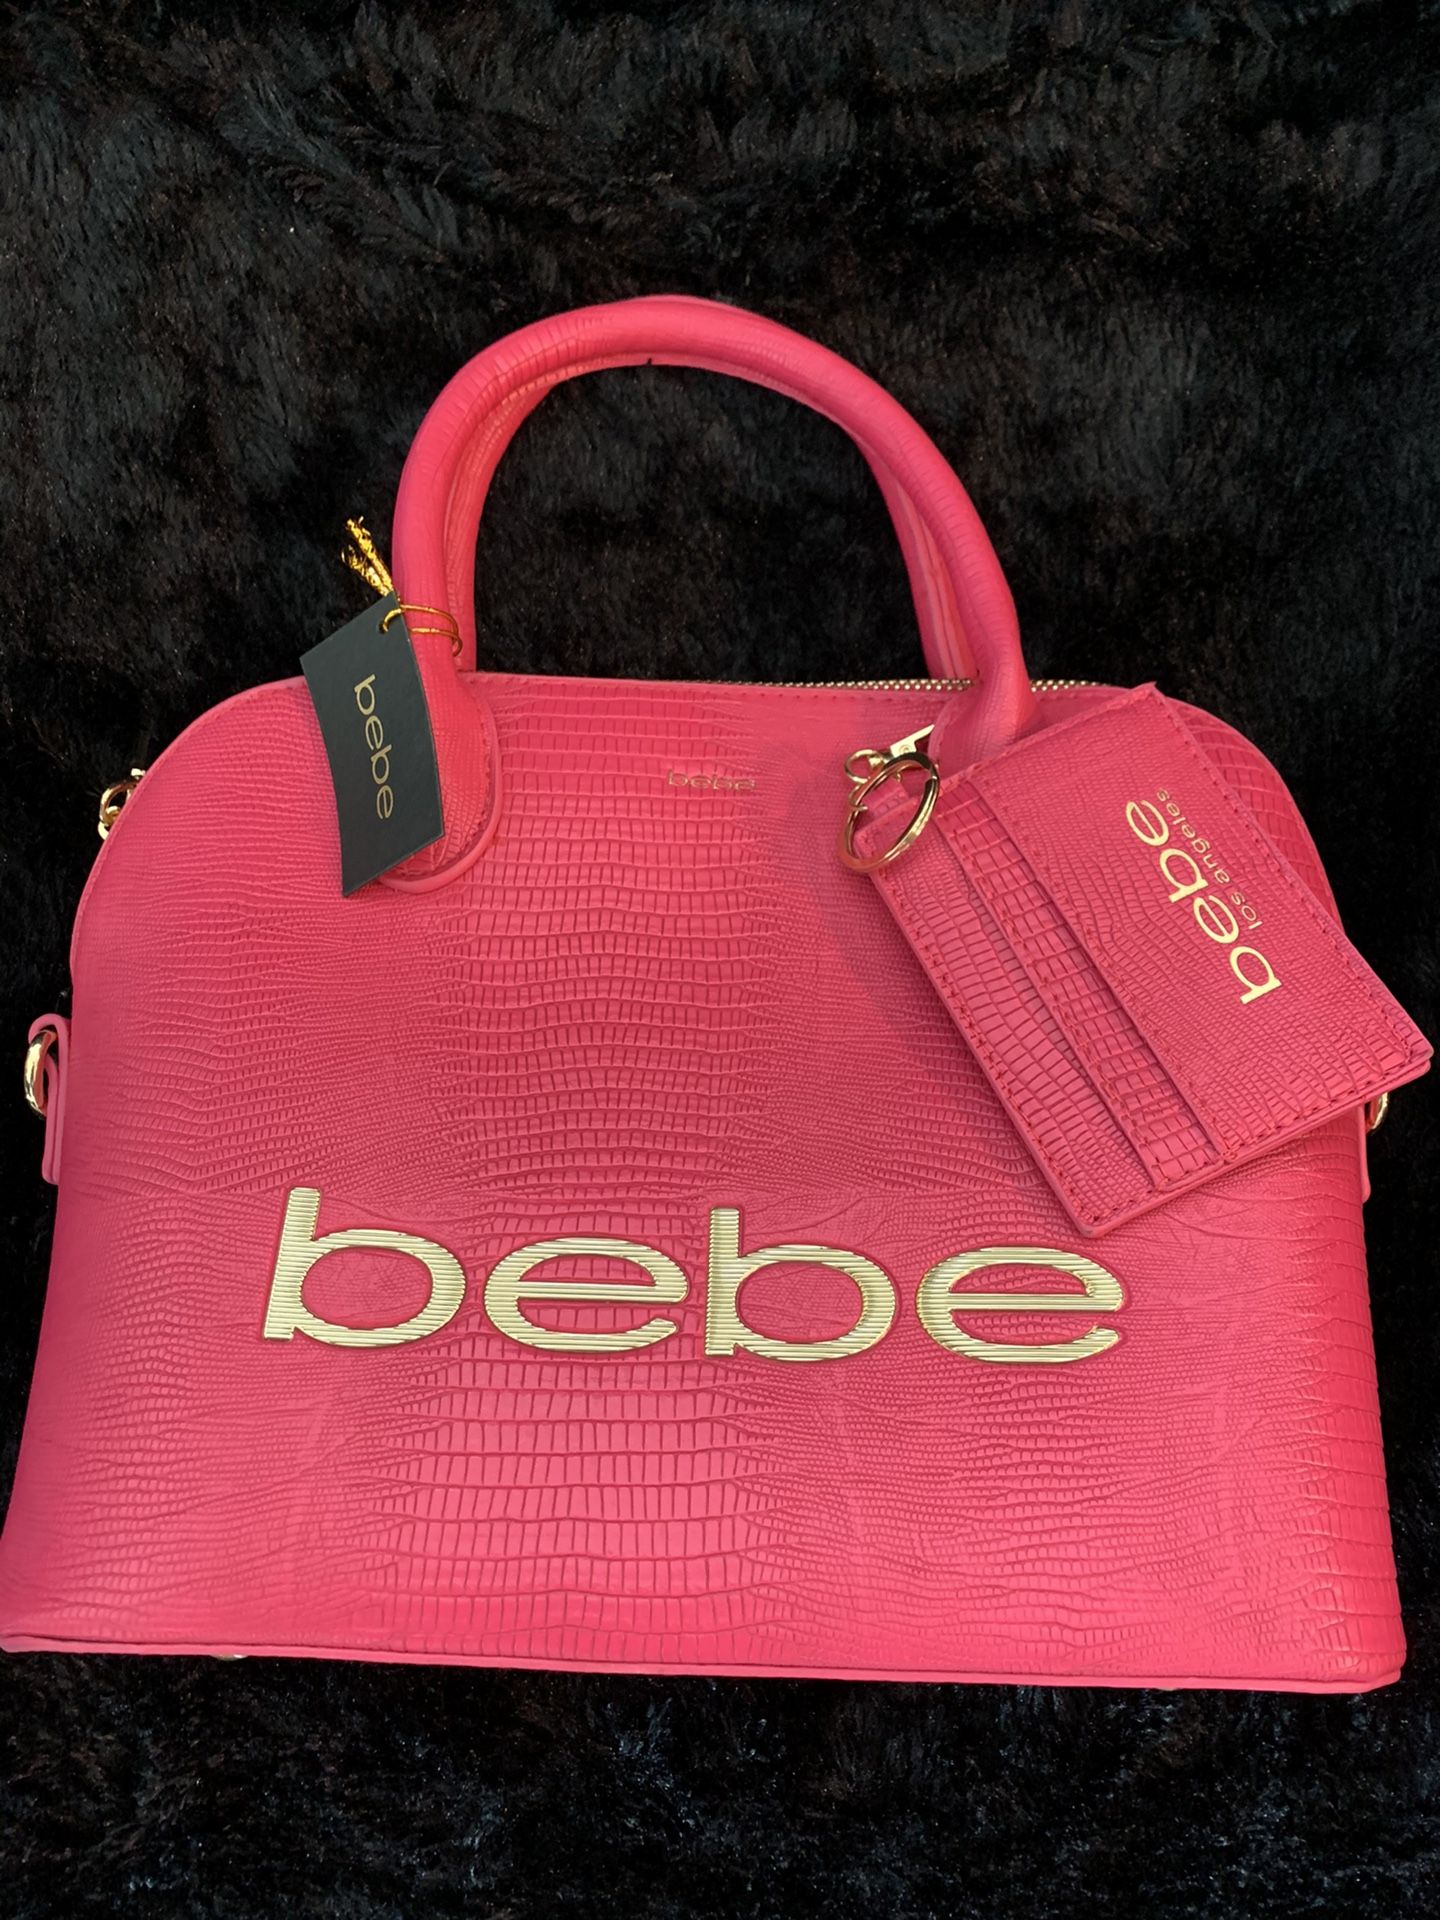 Brand New Bebe Brand Pink Bag / Purse with Removable Shoulder Strap & Gold Hardware